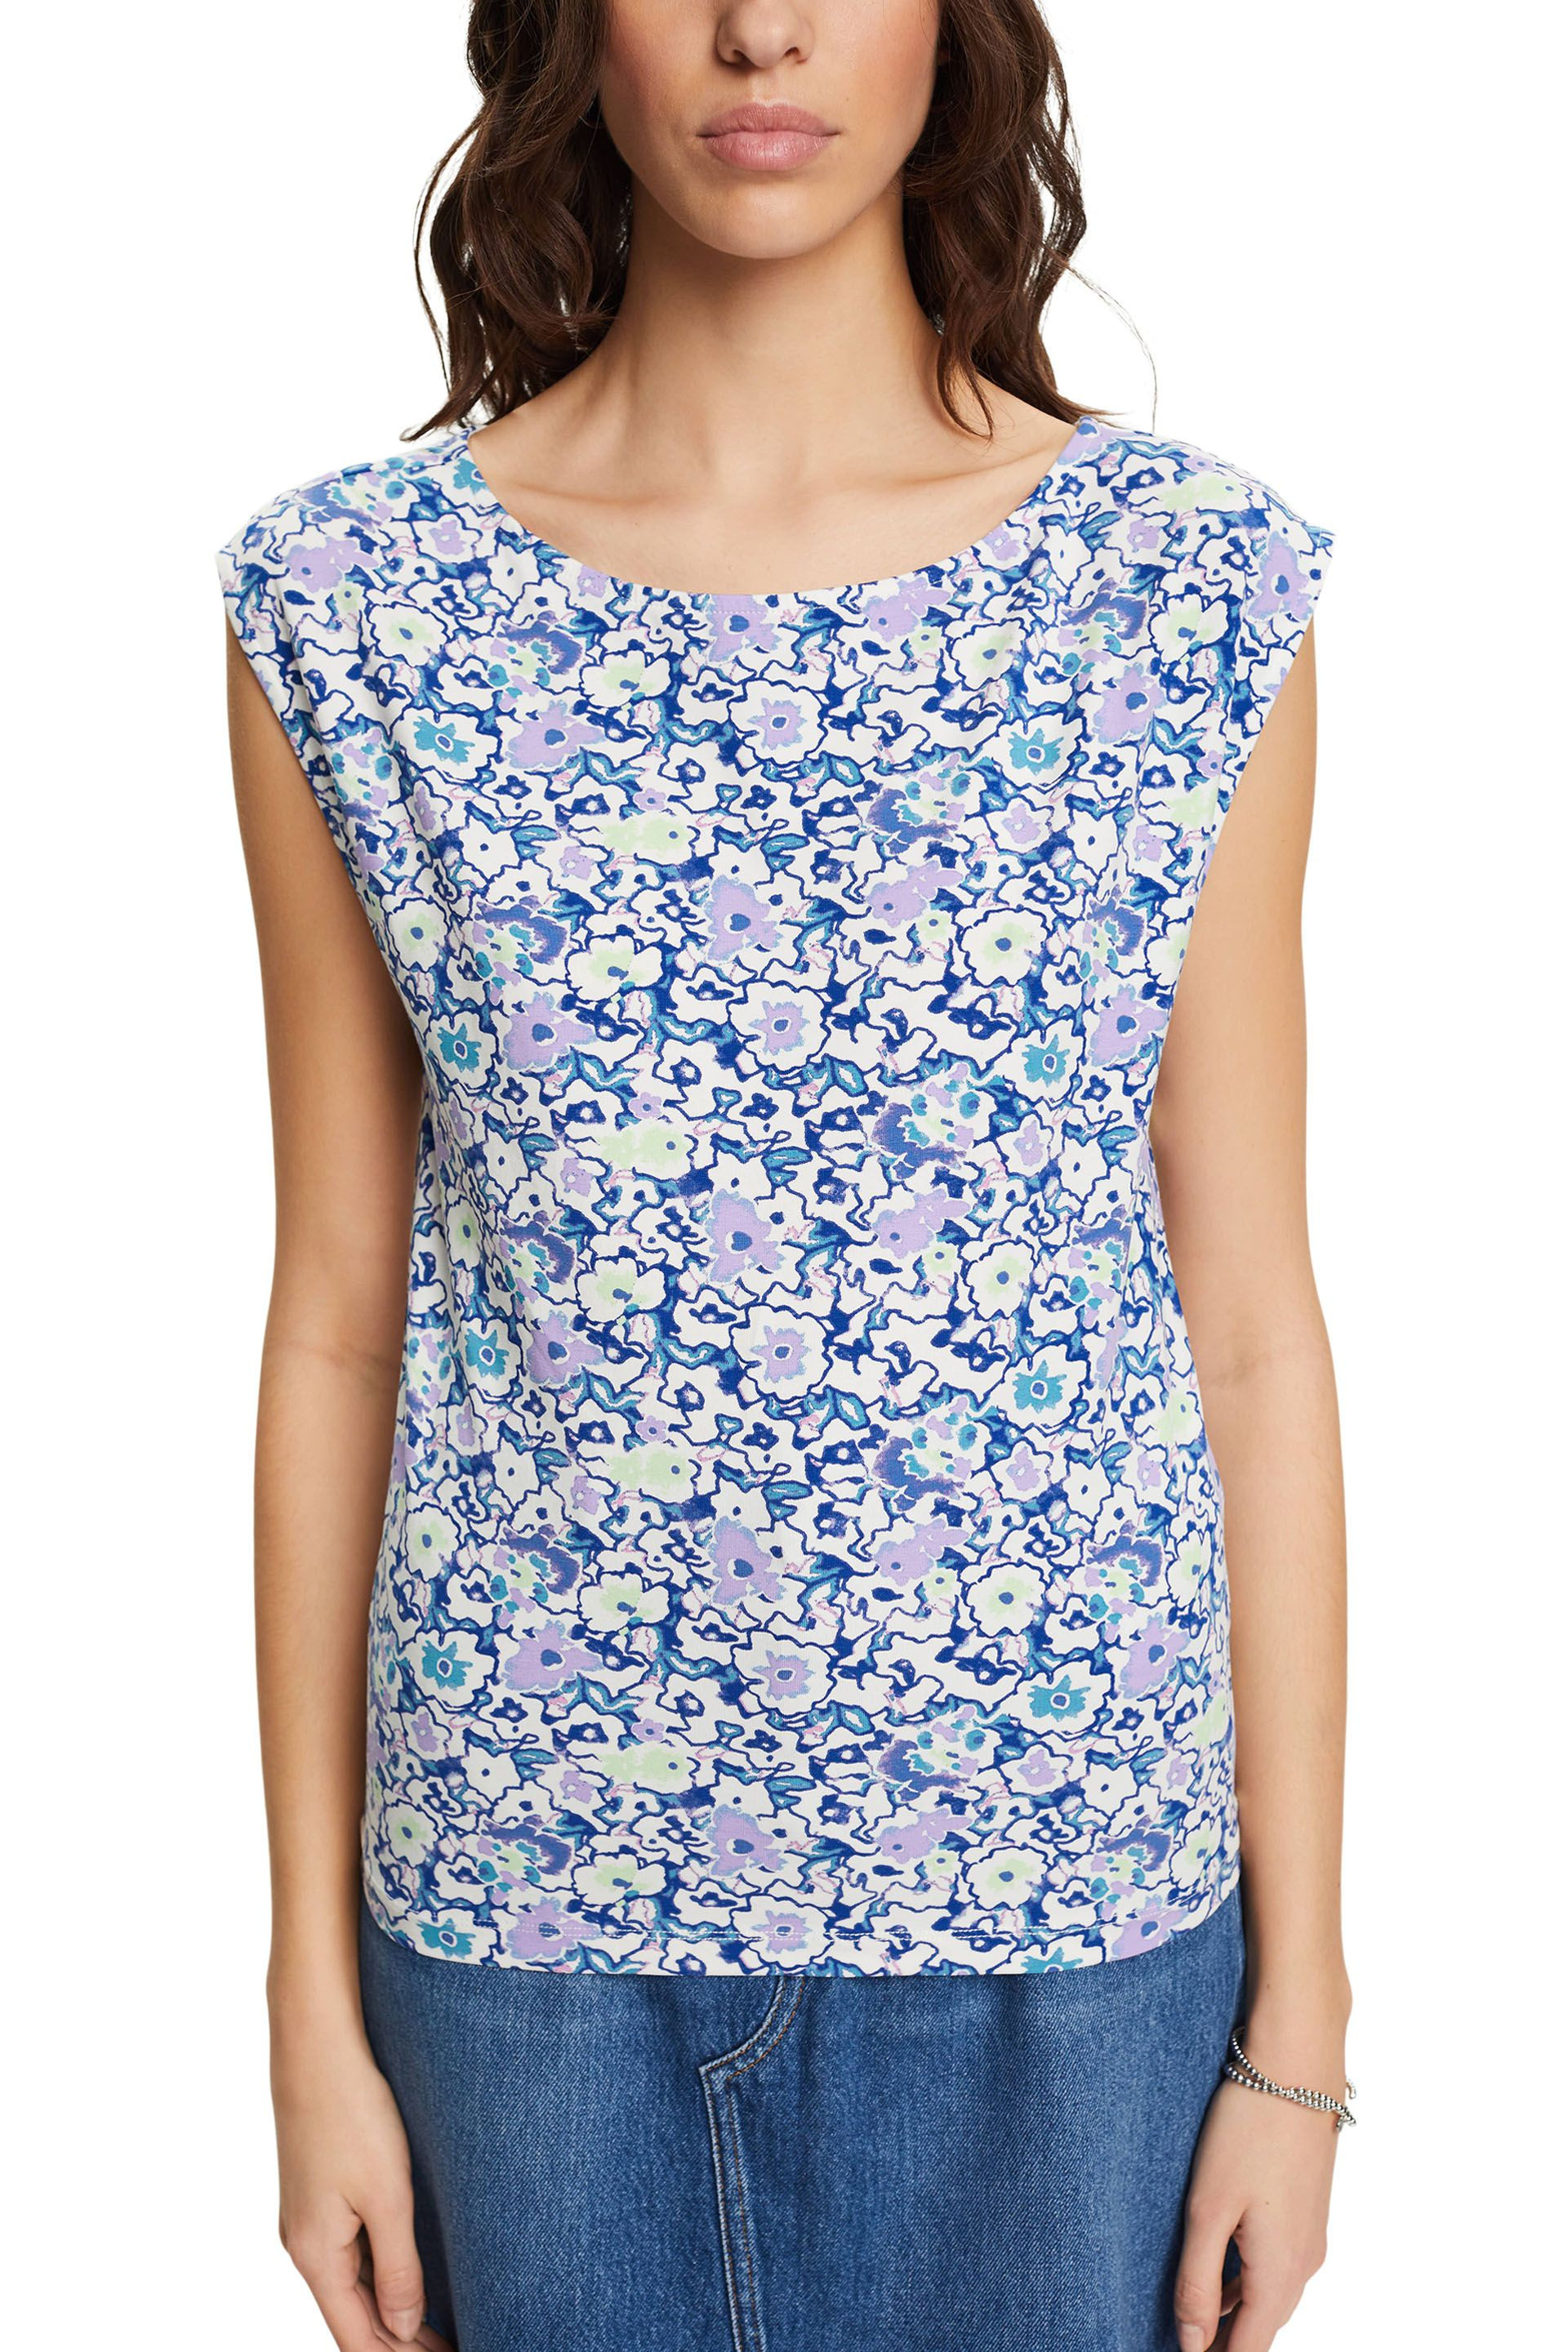 Esprit - T-shirt con stampa floreale, Blu, large image number 2